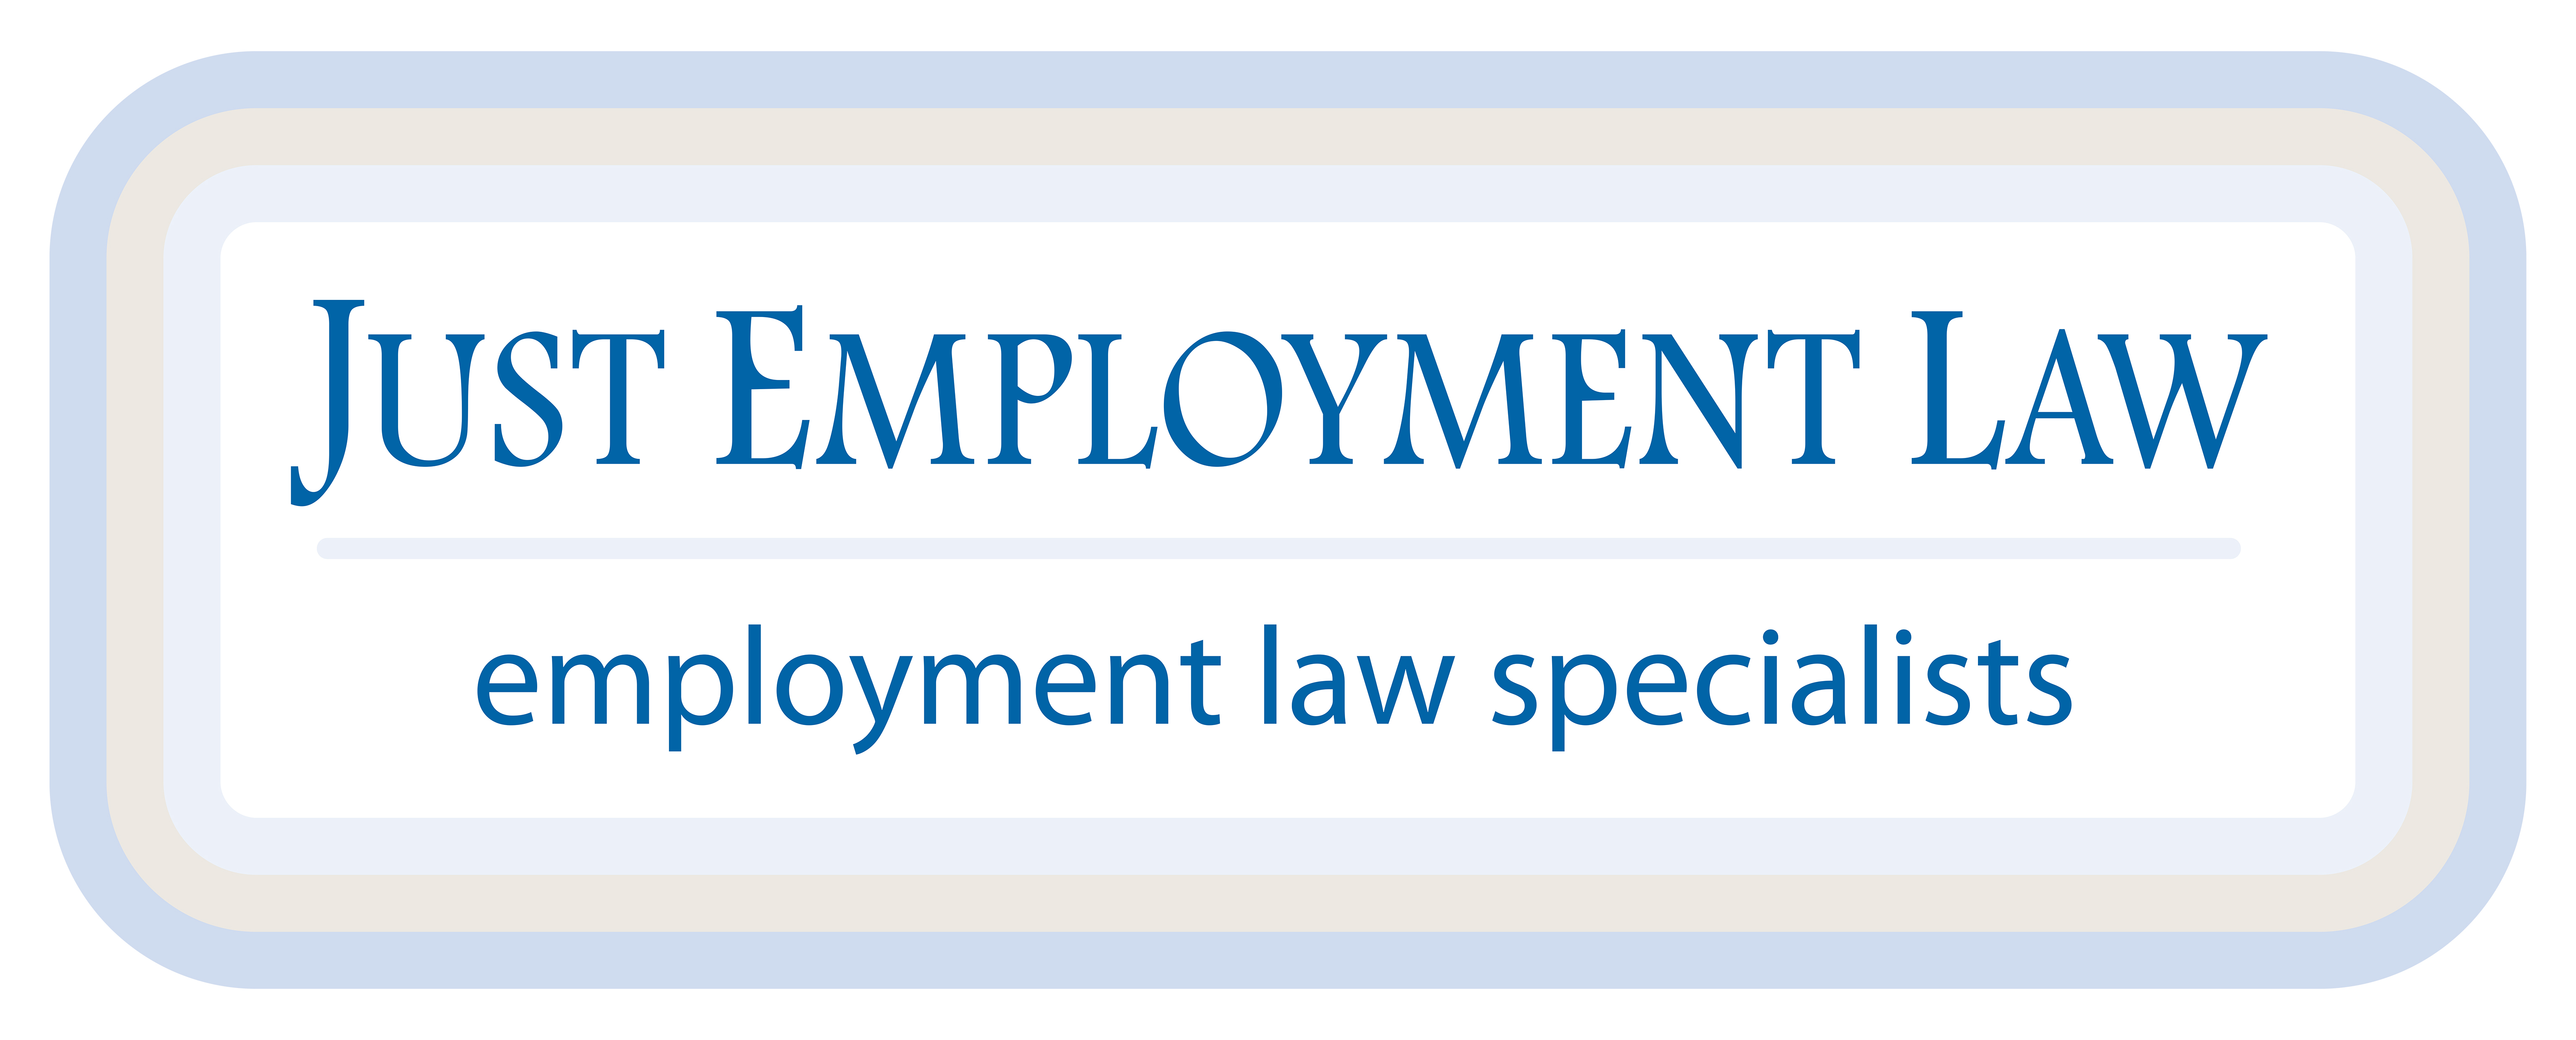 Just employment law logo